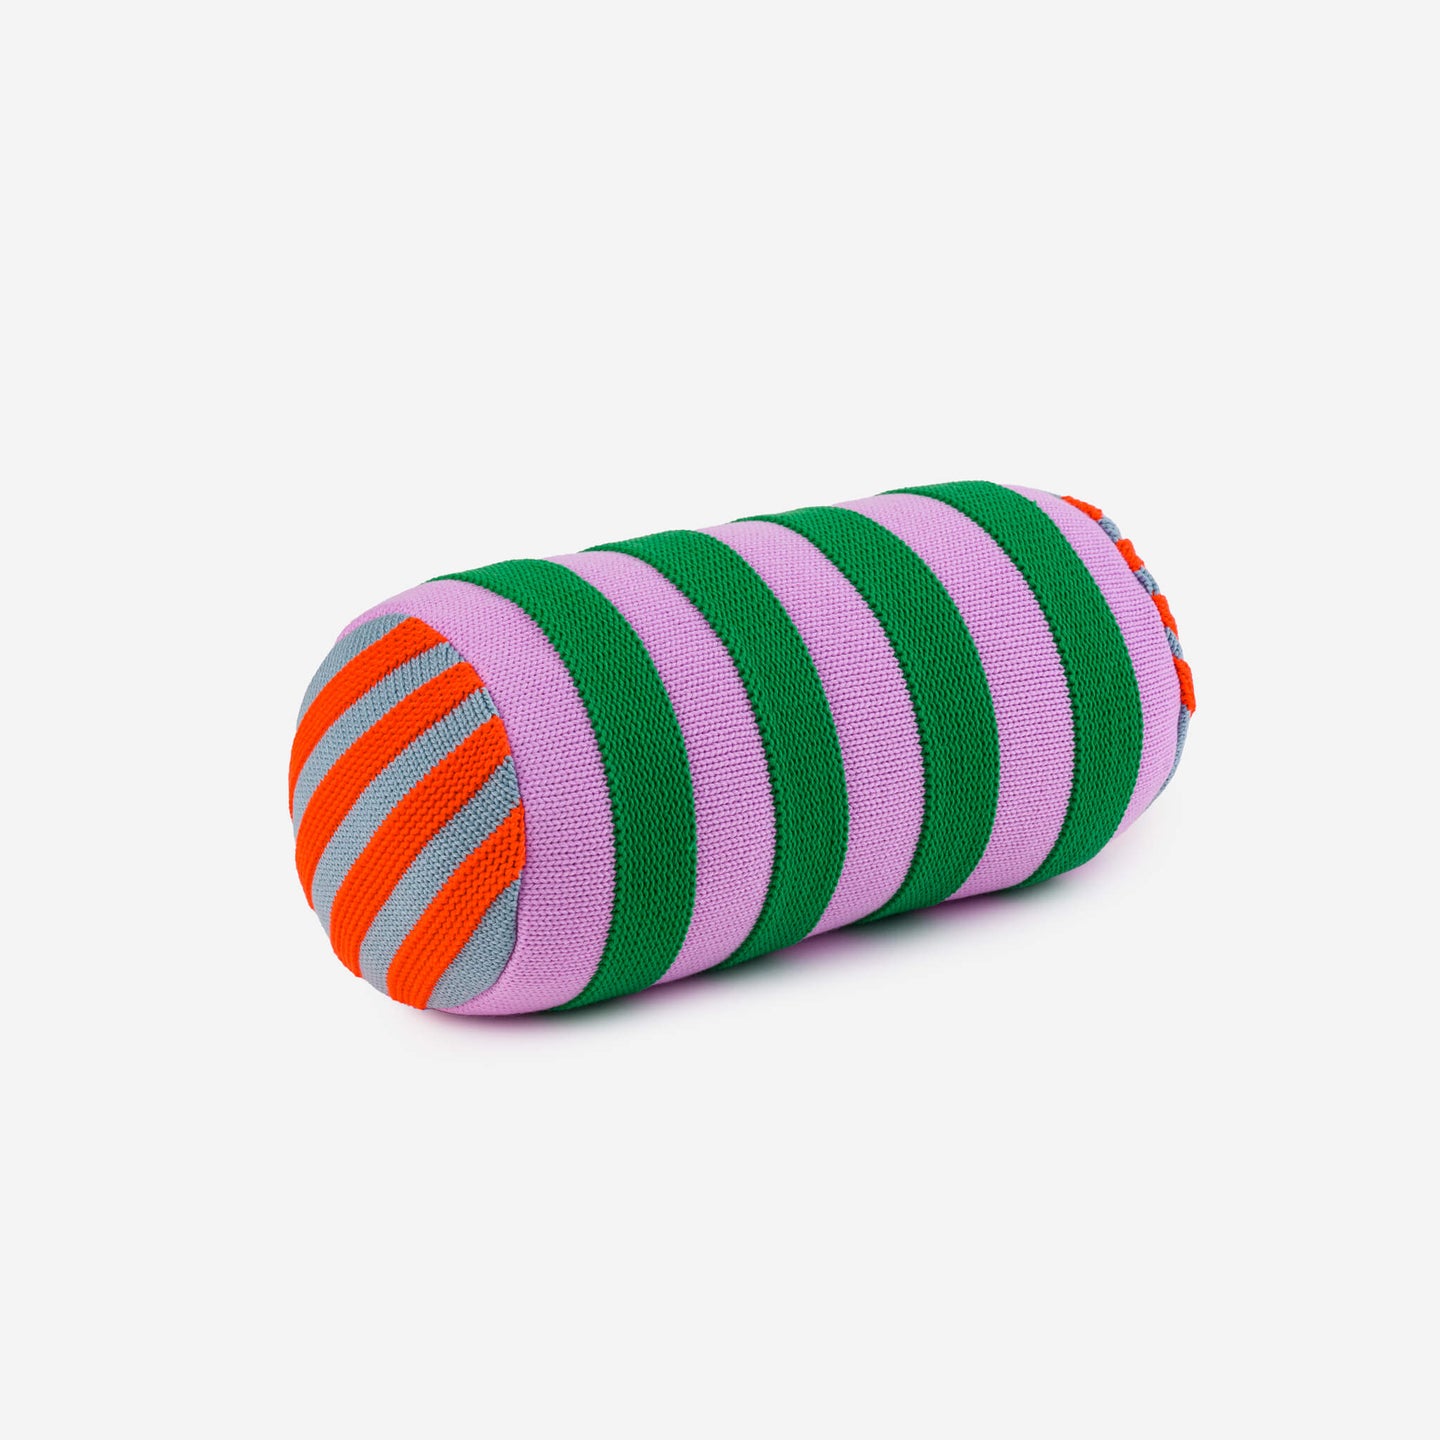 Super Stripe Knit Textured Stripes Bolster Pillow Accent